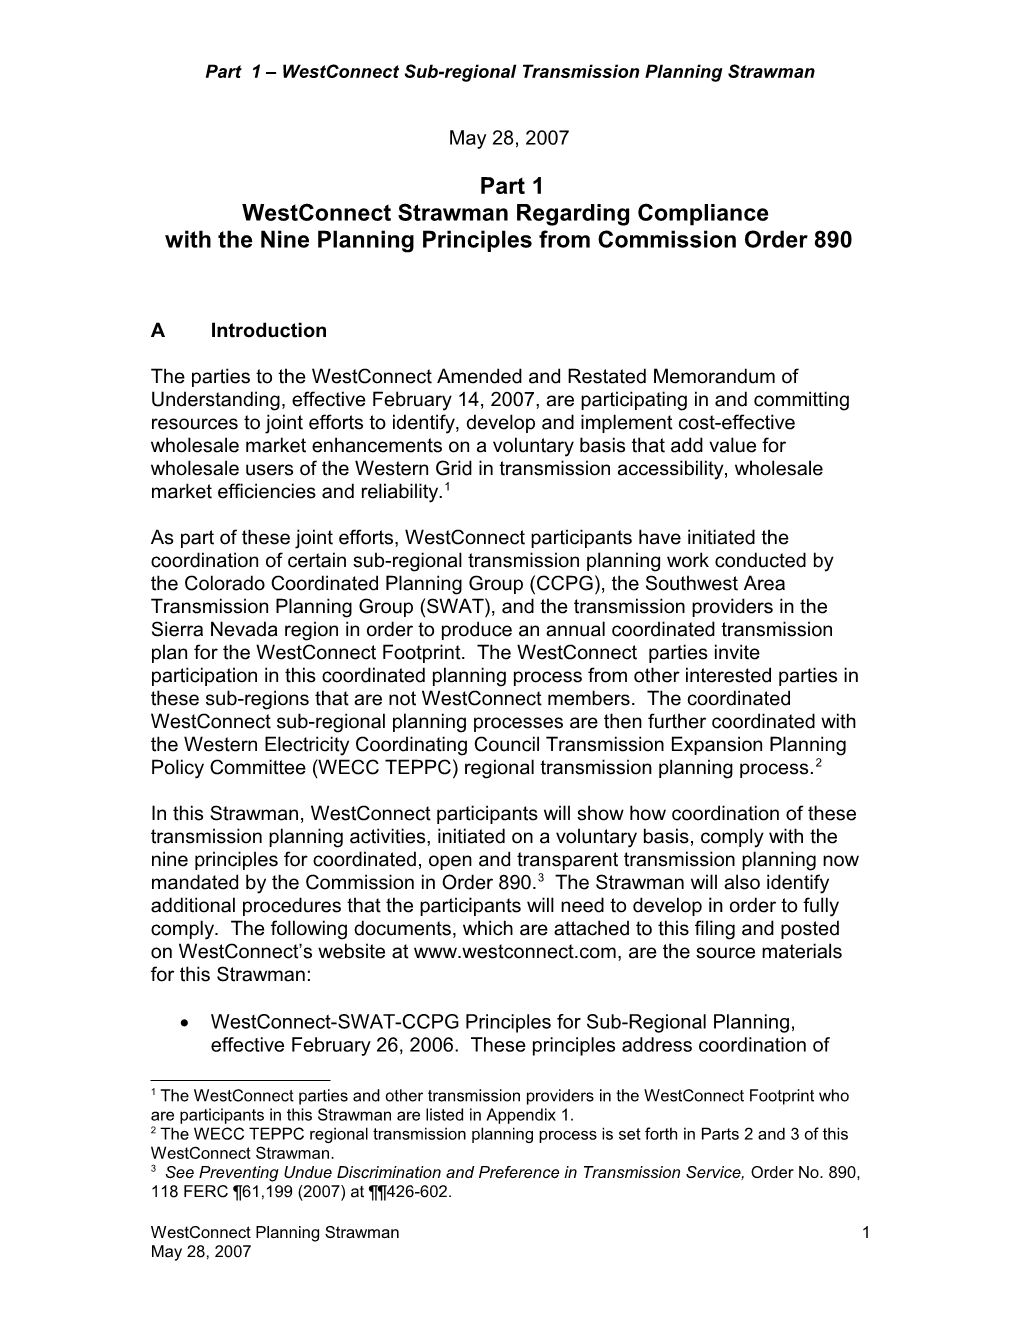 Part 1 Westconnect Sub-Regional Transmission Planning Strawman